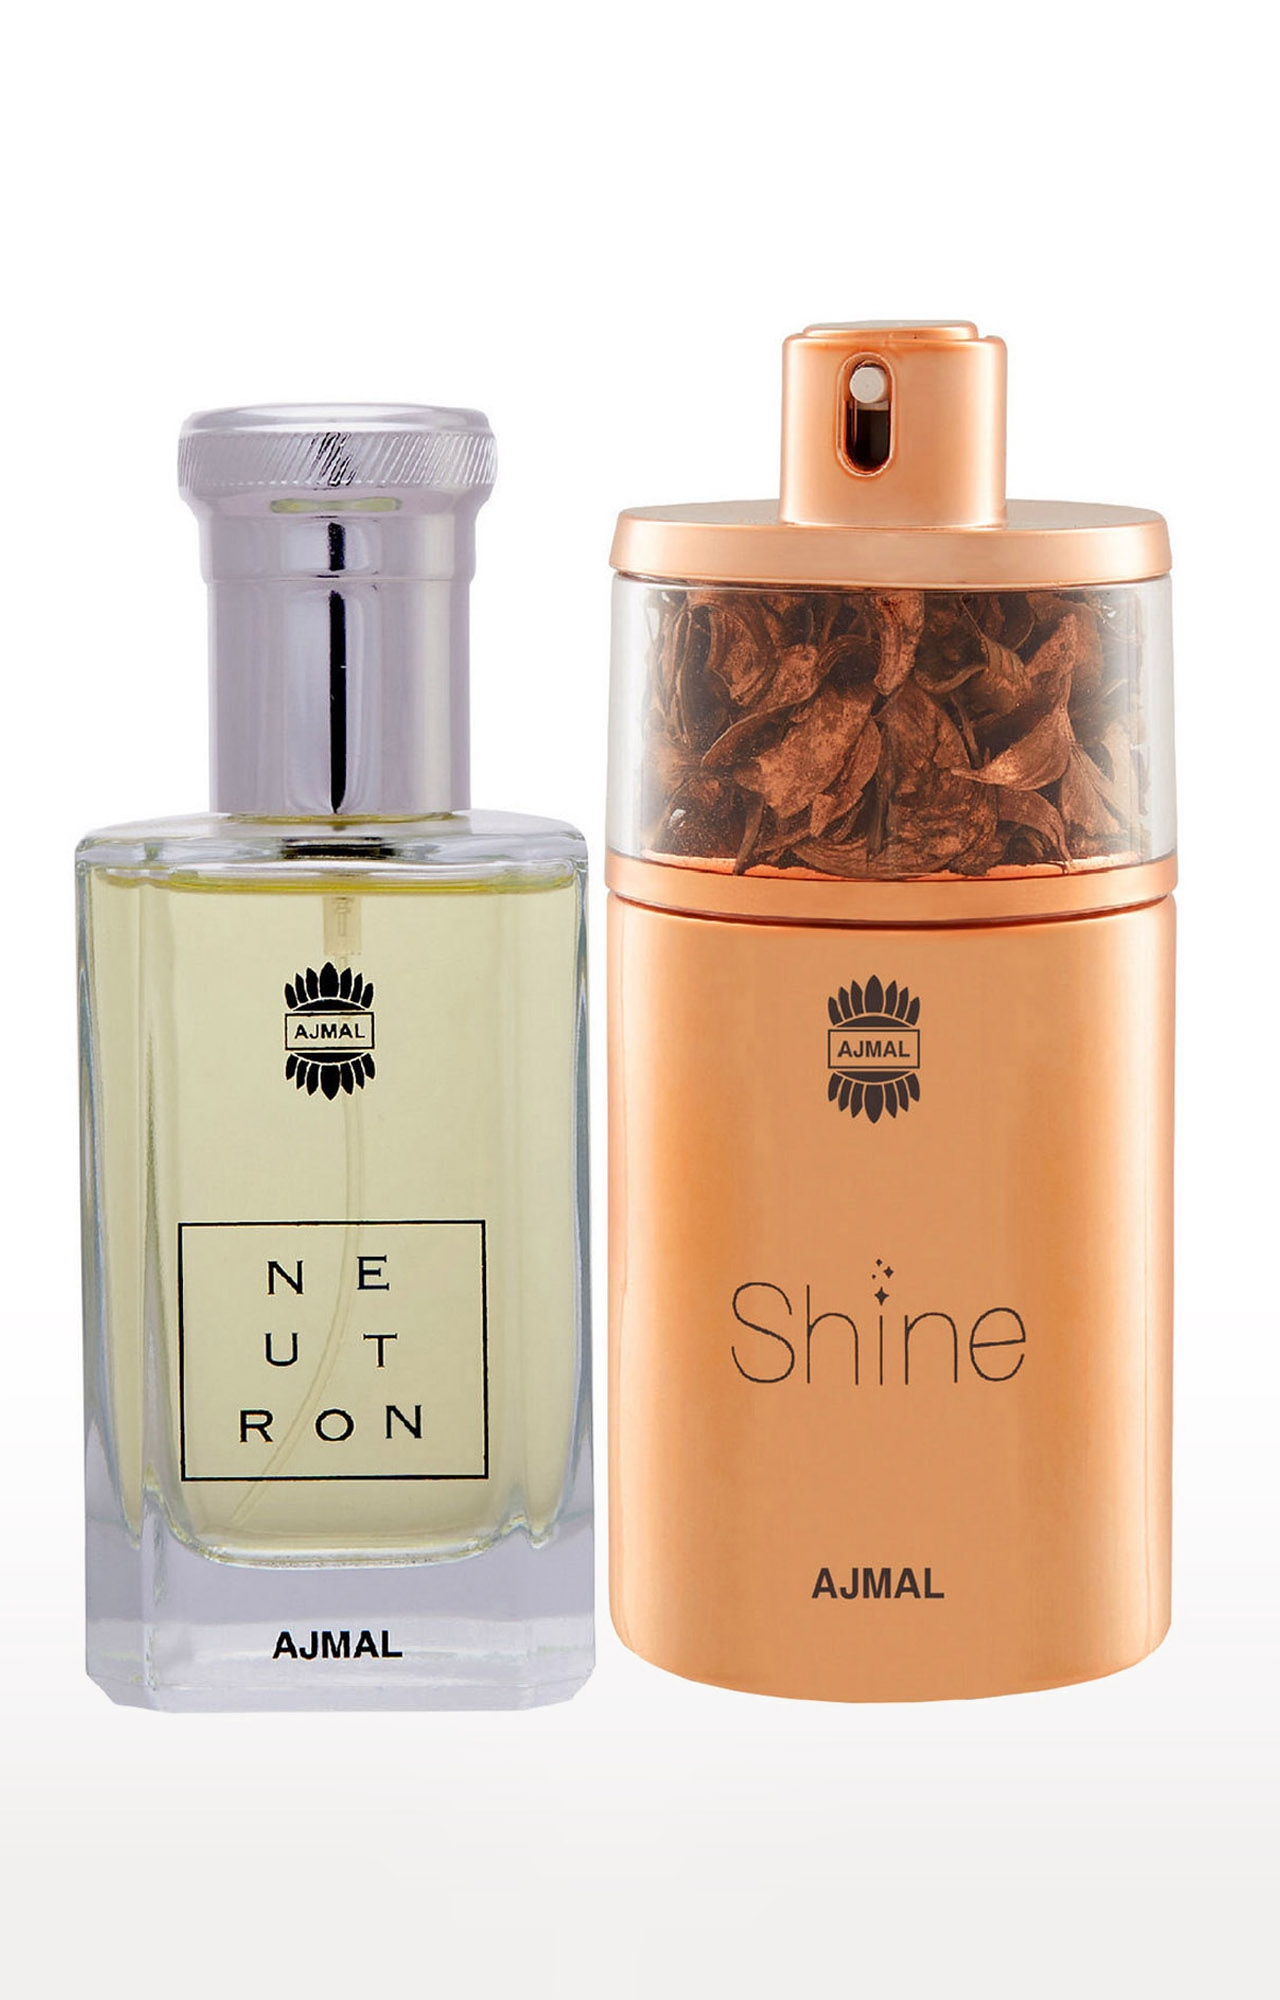 Ajmal Neutron EDP Fruity Perfume 100ml for Men and Shine EDP Perfume 75ml for Women